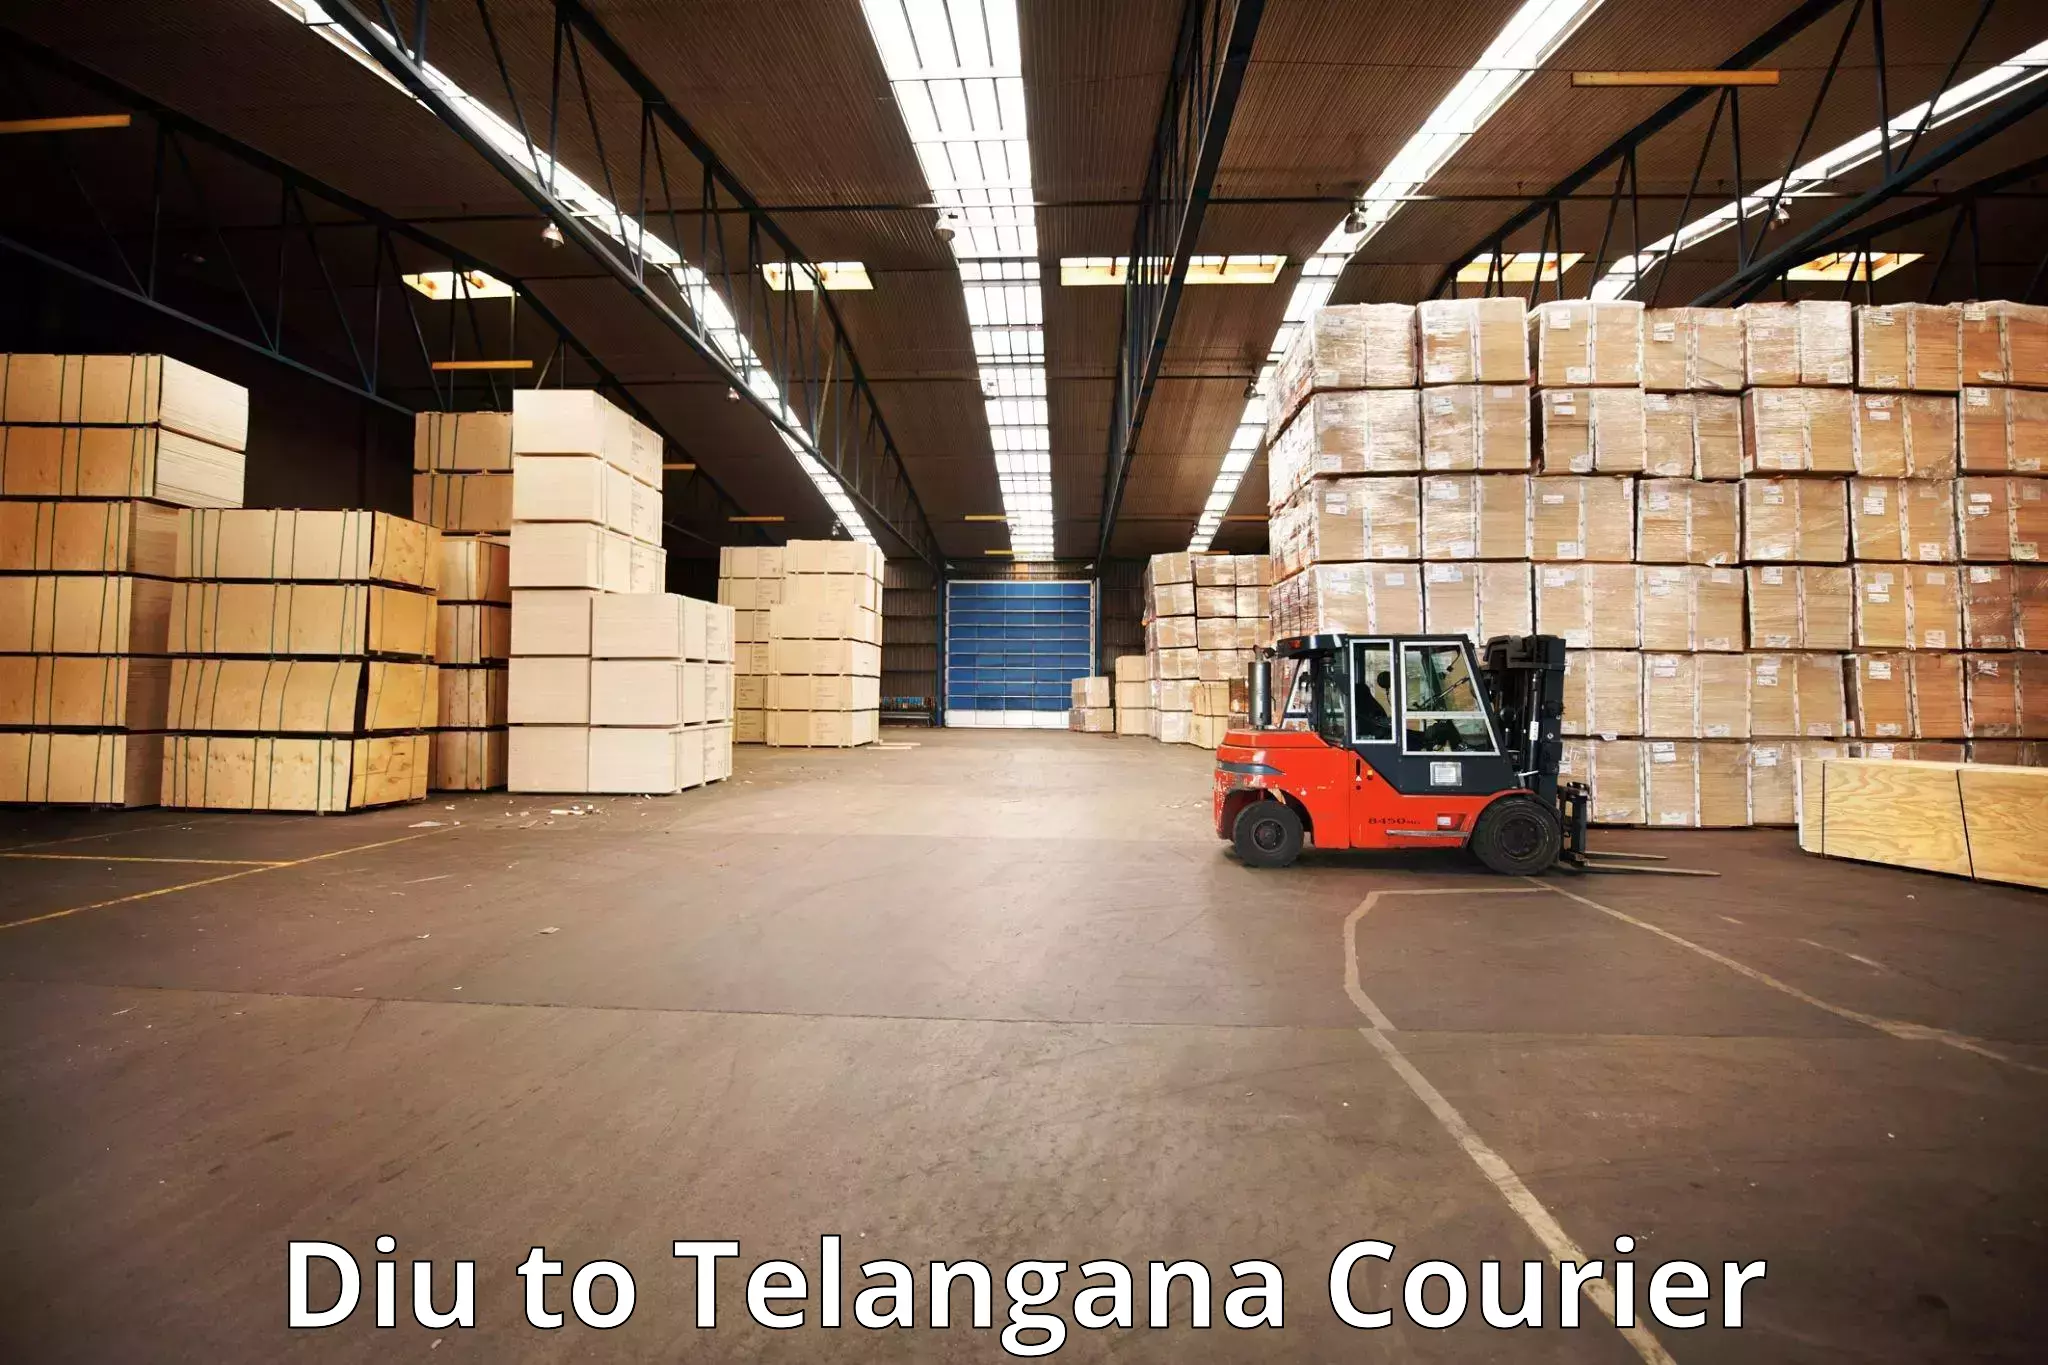 Luggage transport company Diu to Allapalli